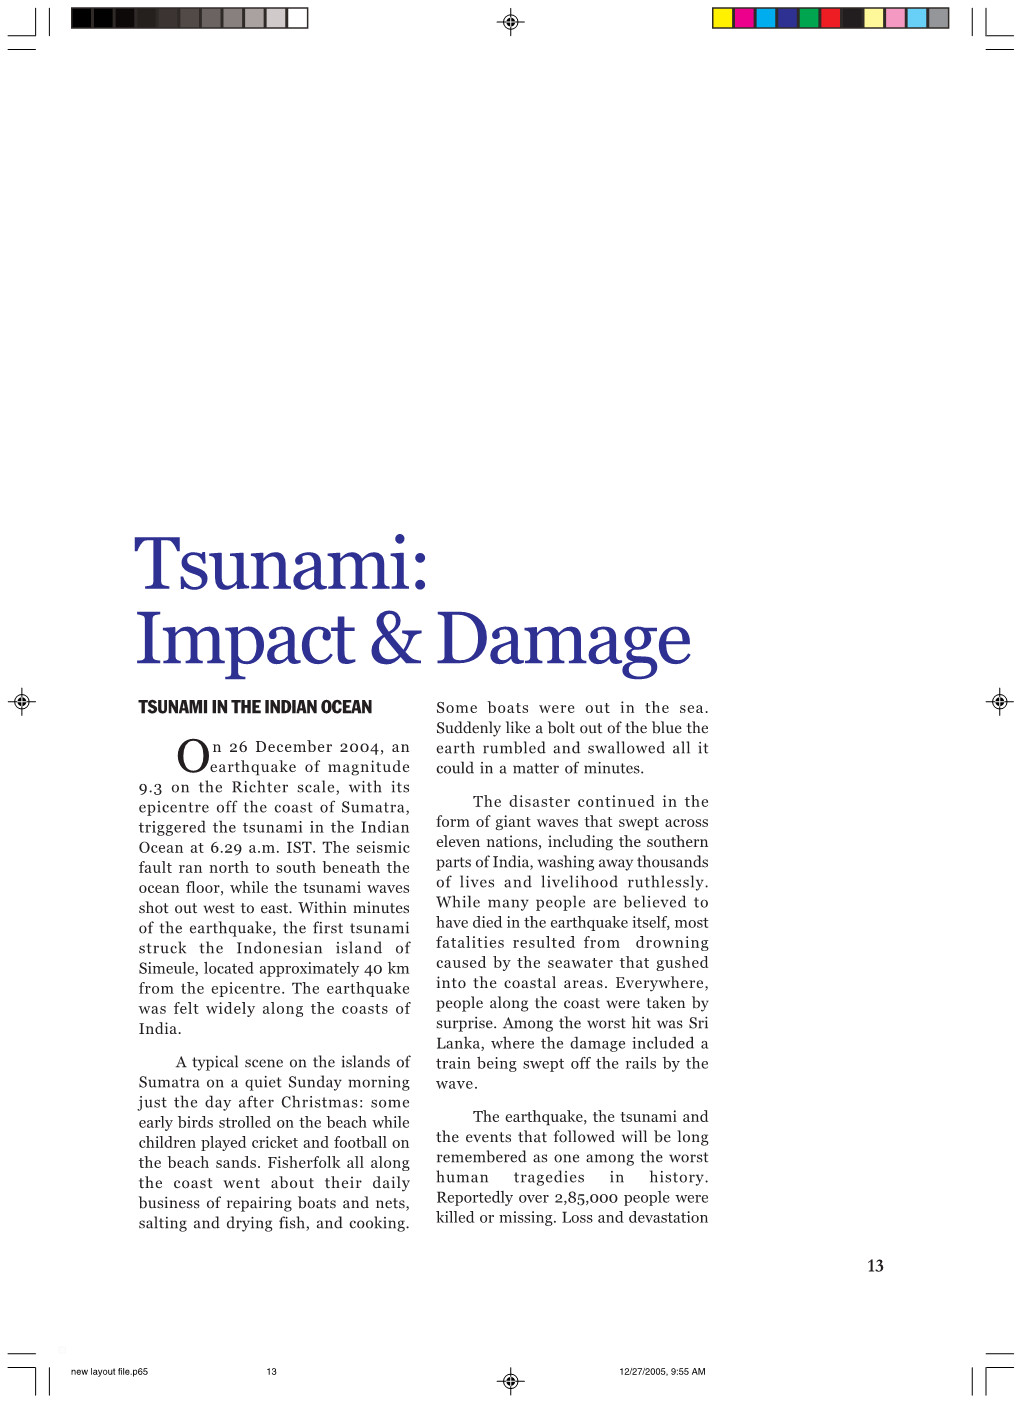 Tsunami: Impact & Damage